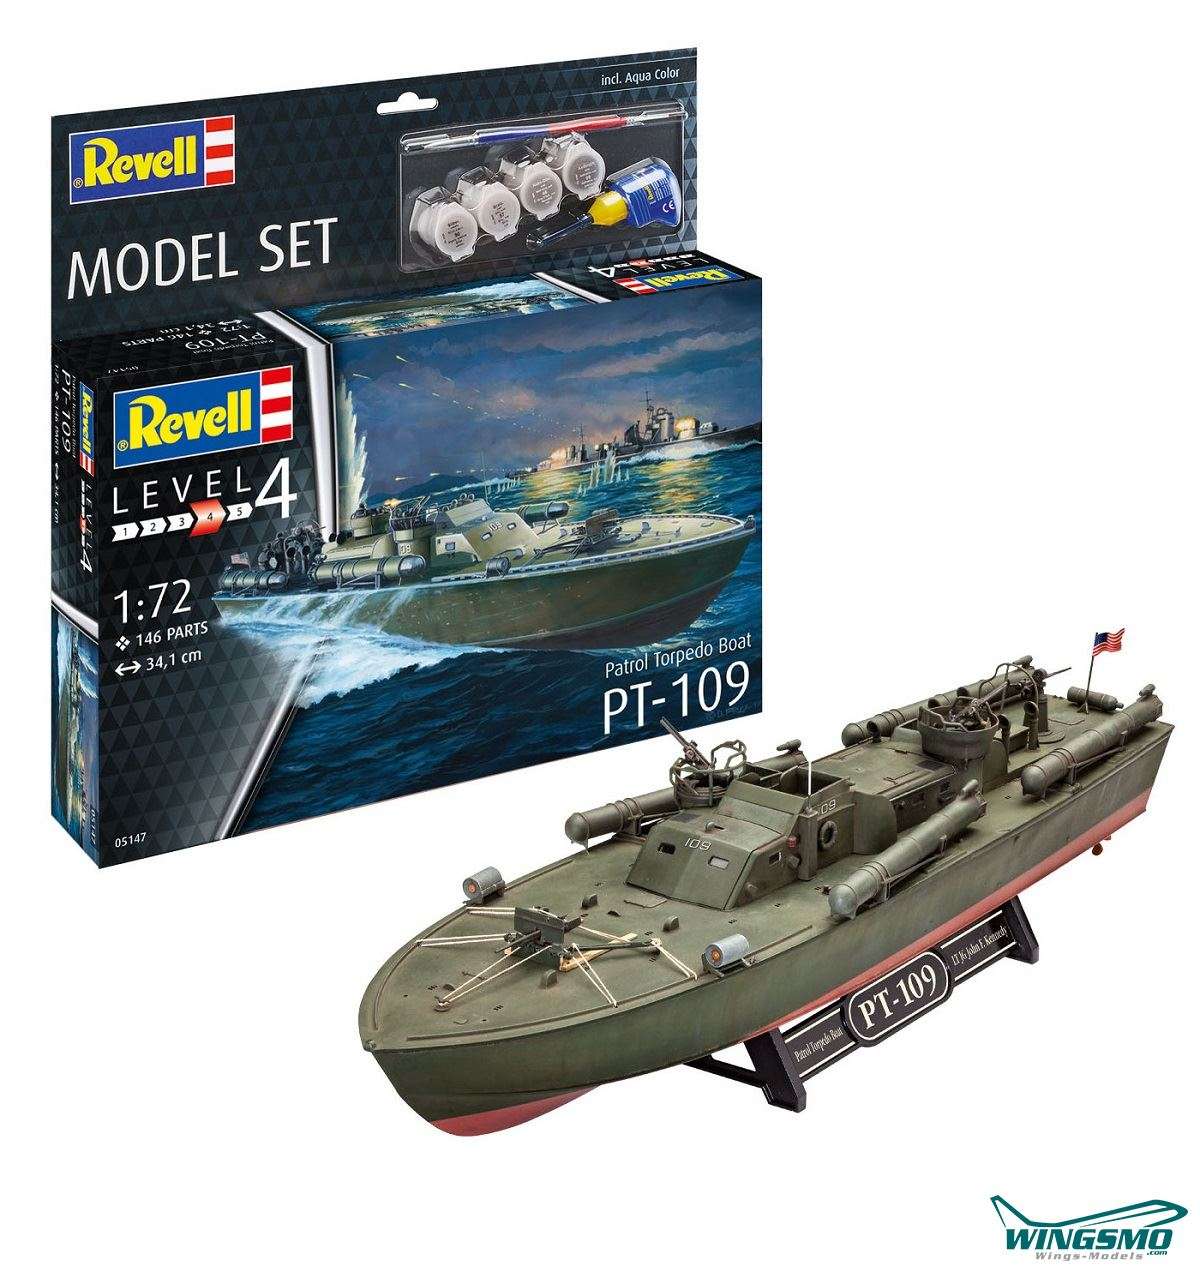 Revell Model Sets Patrol Torpedo Boat PT-109 1:72 65147